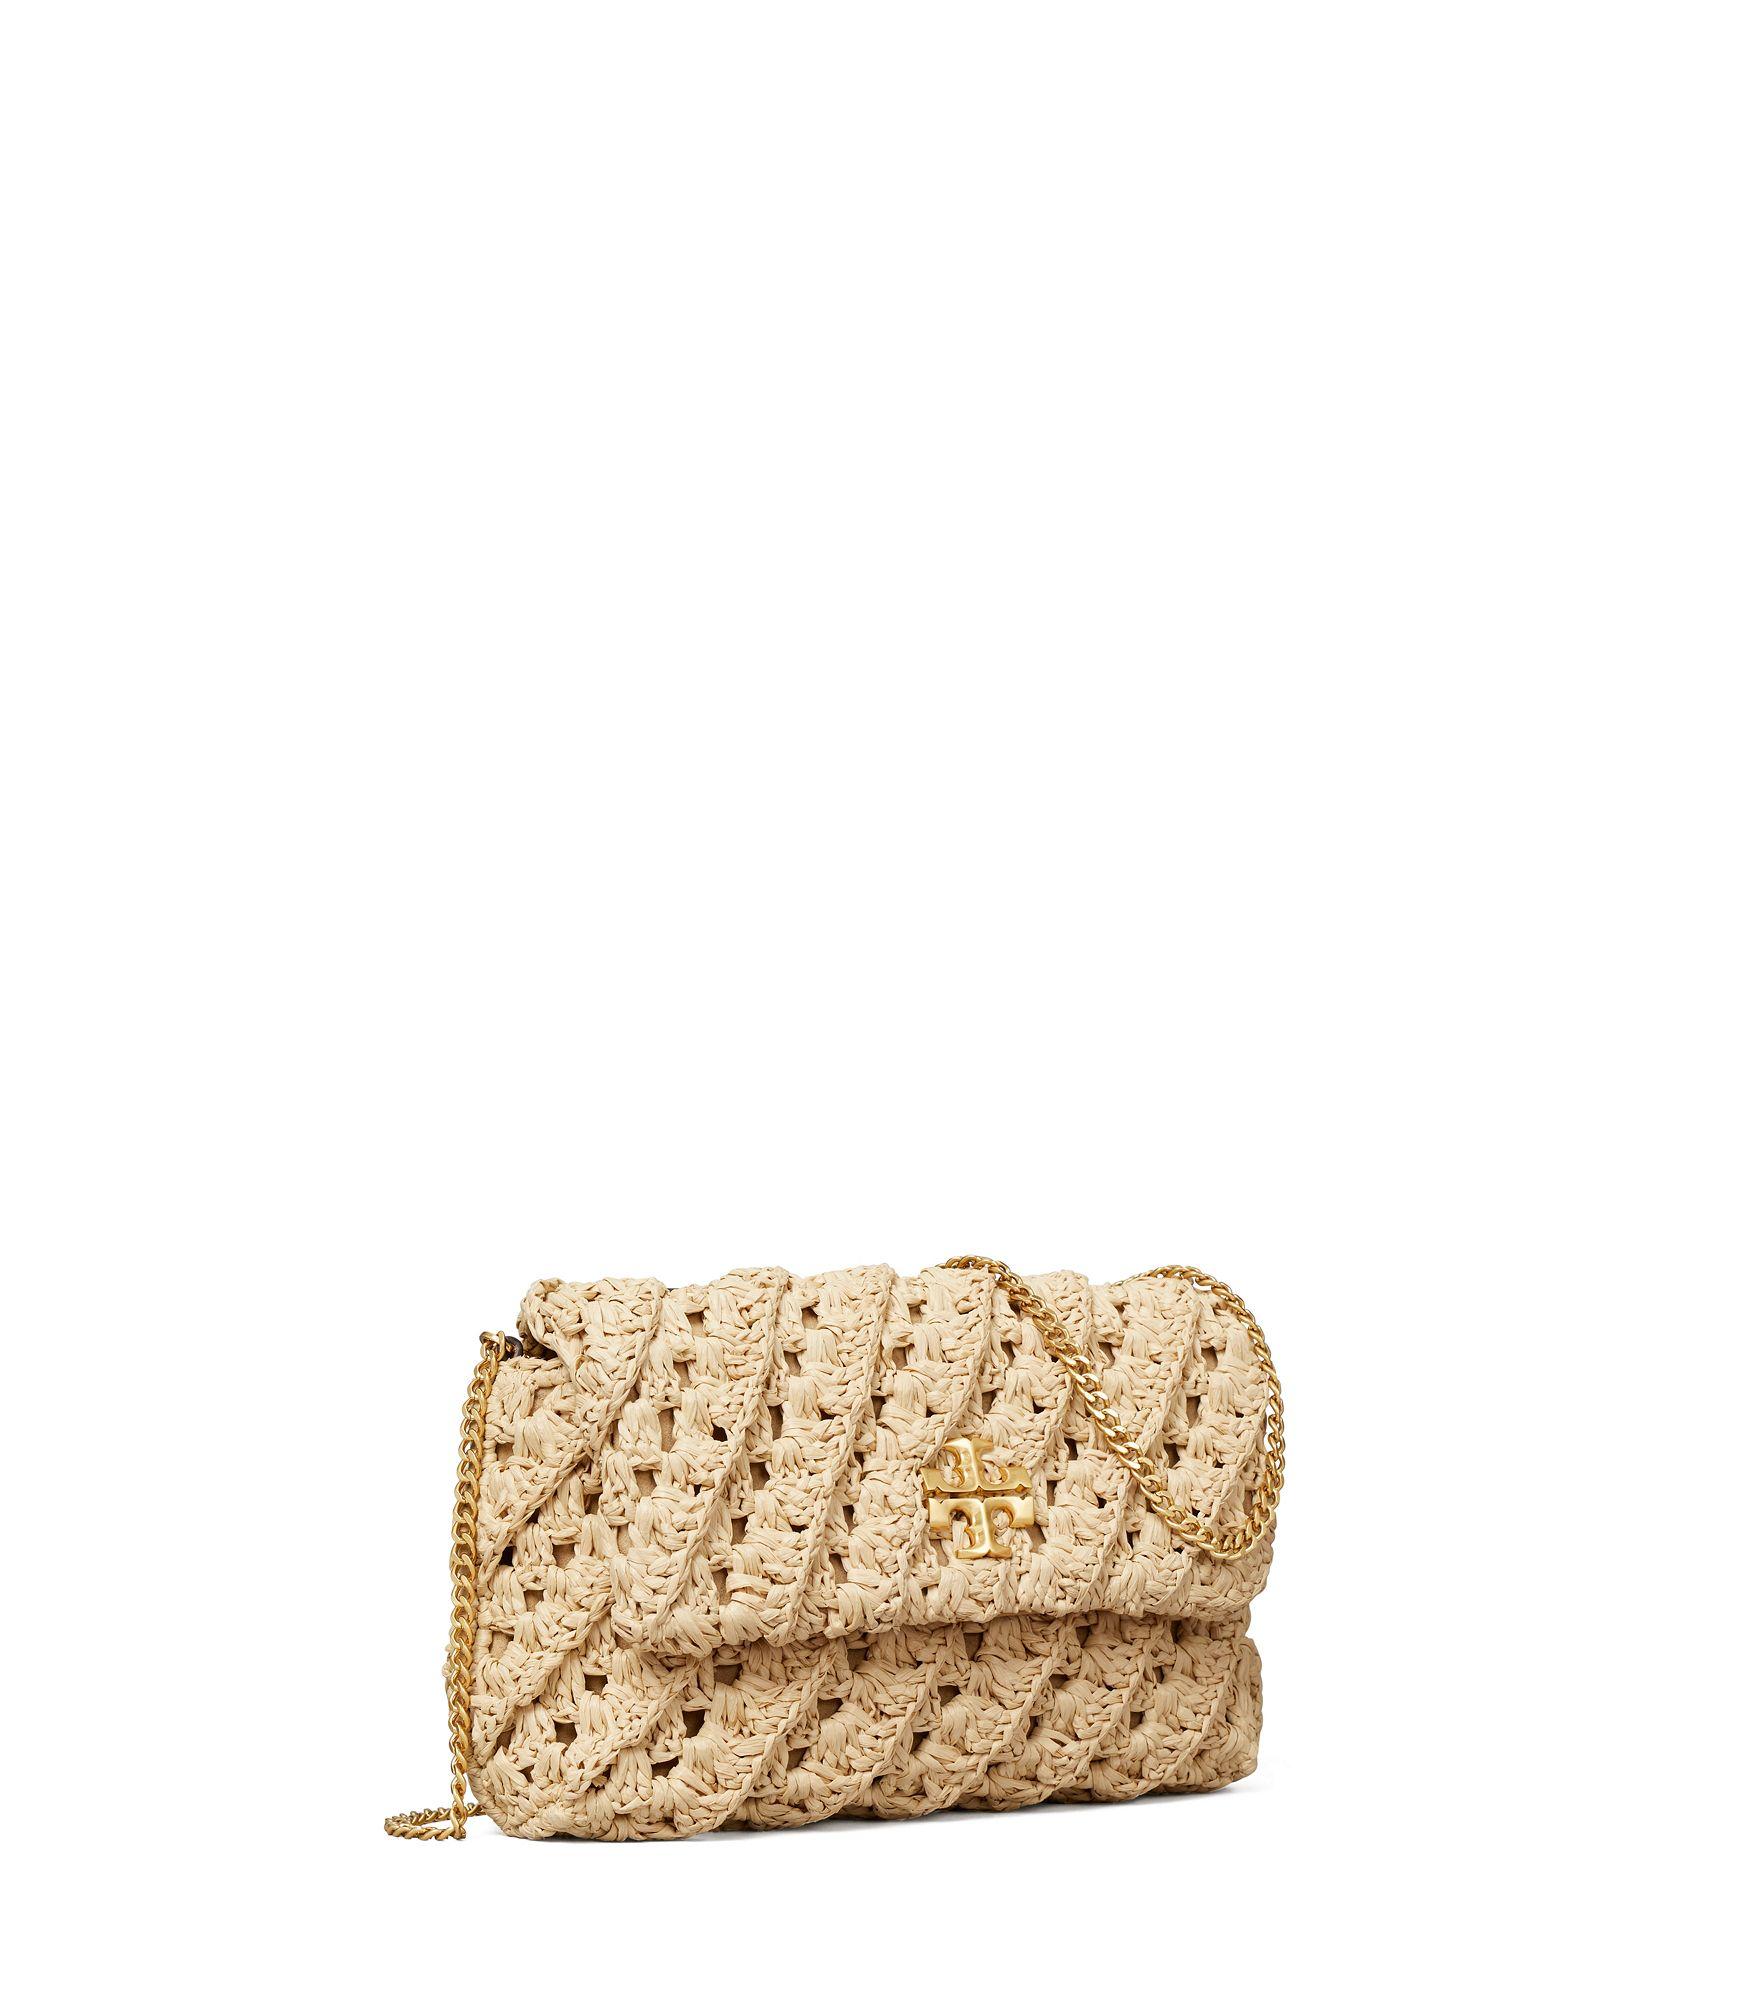 Tory Burch Mini Kira Crochet Bag in Natural | Lyst